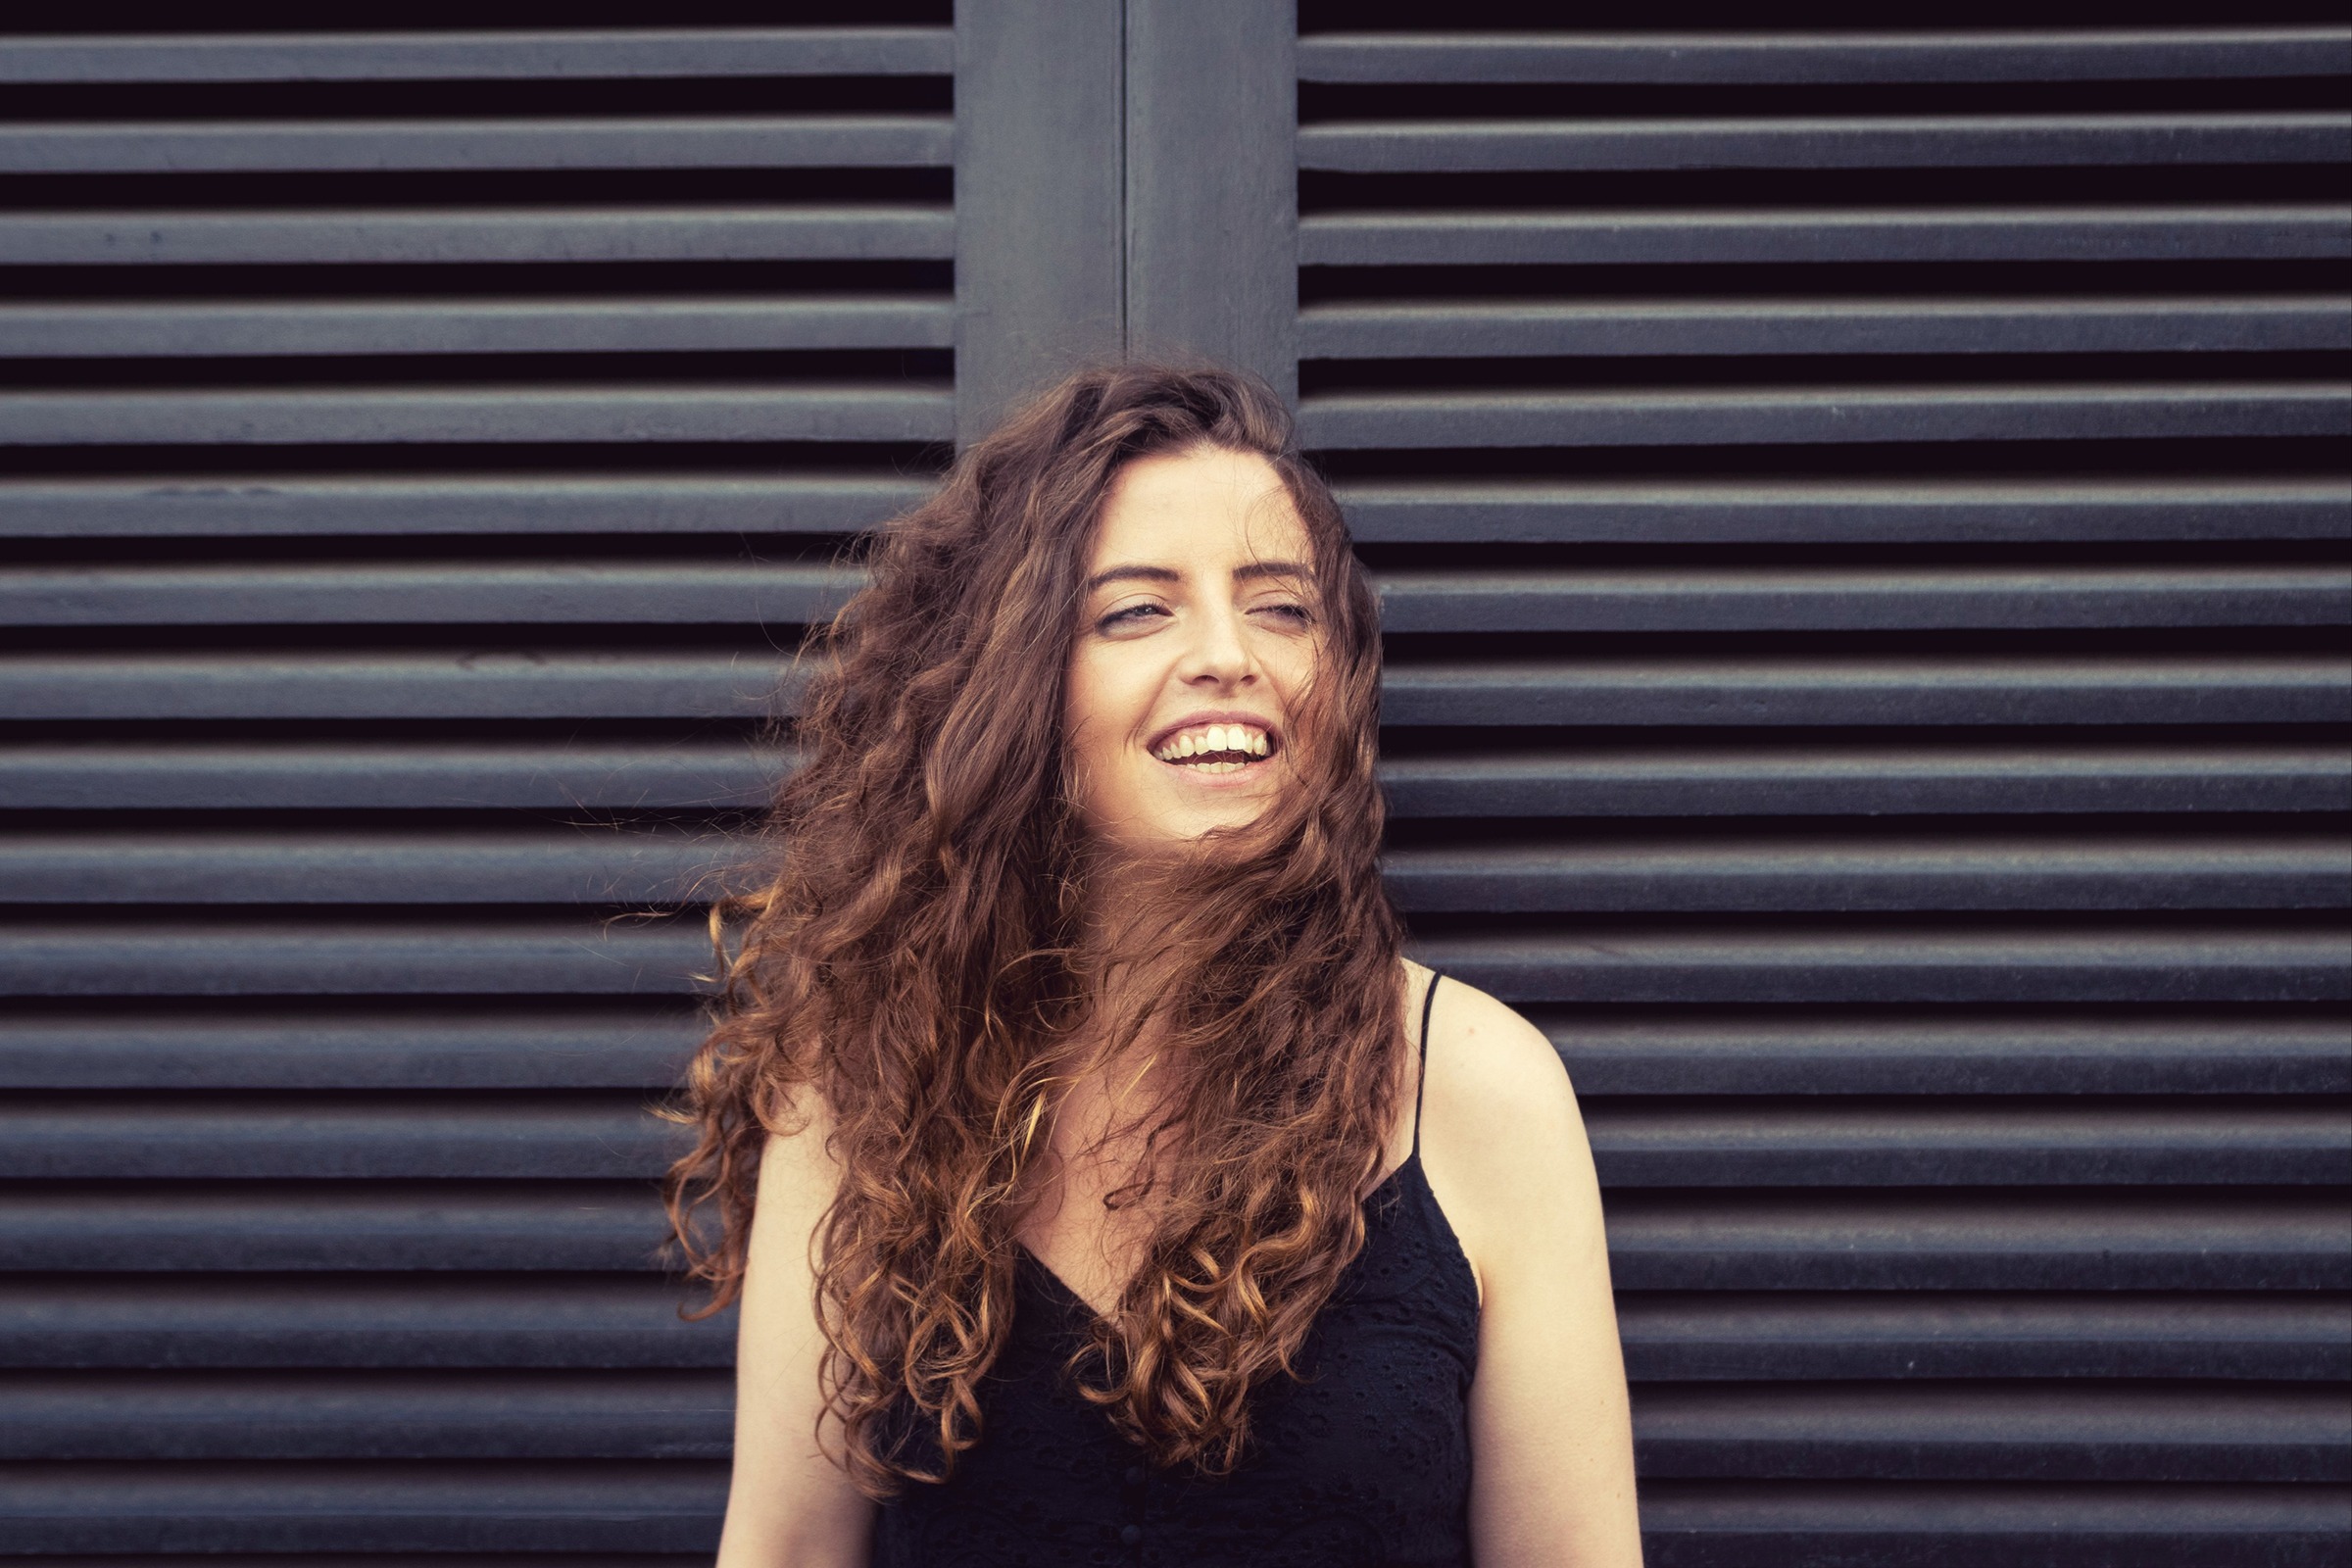 Irish Indie-Pop artist ROWLETTE shares new single 'Letters' - Listen Now 